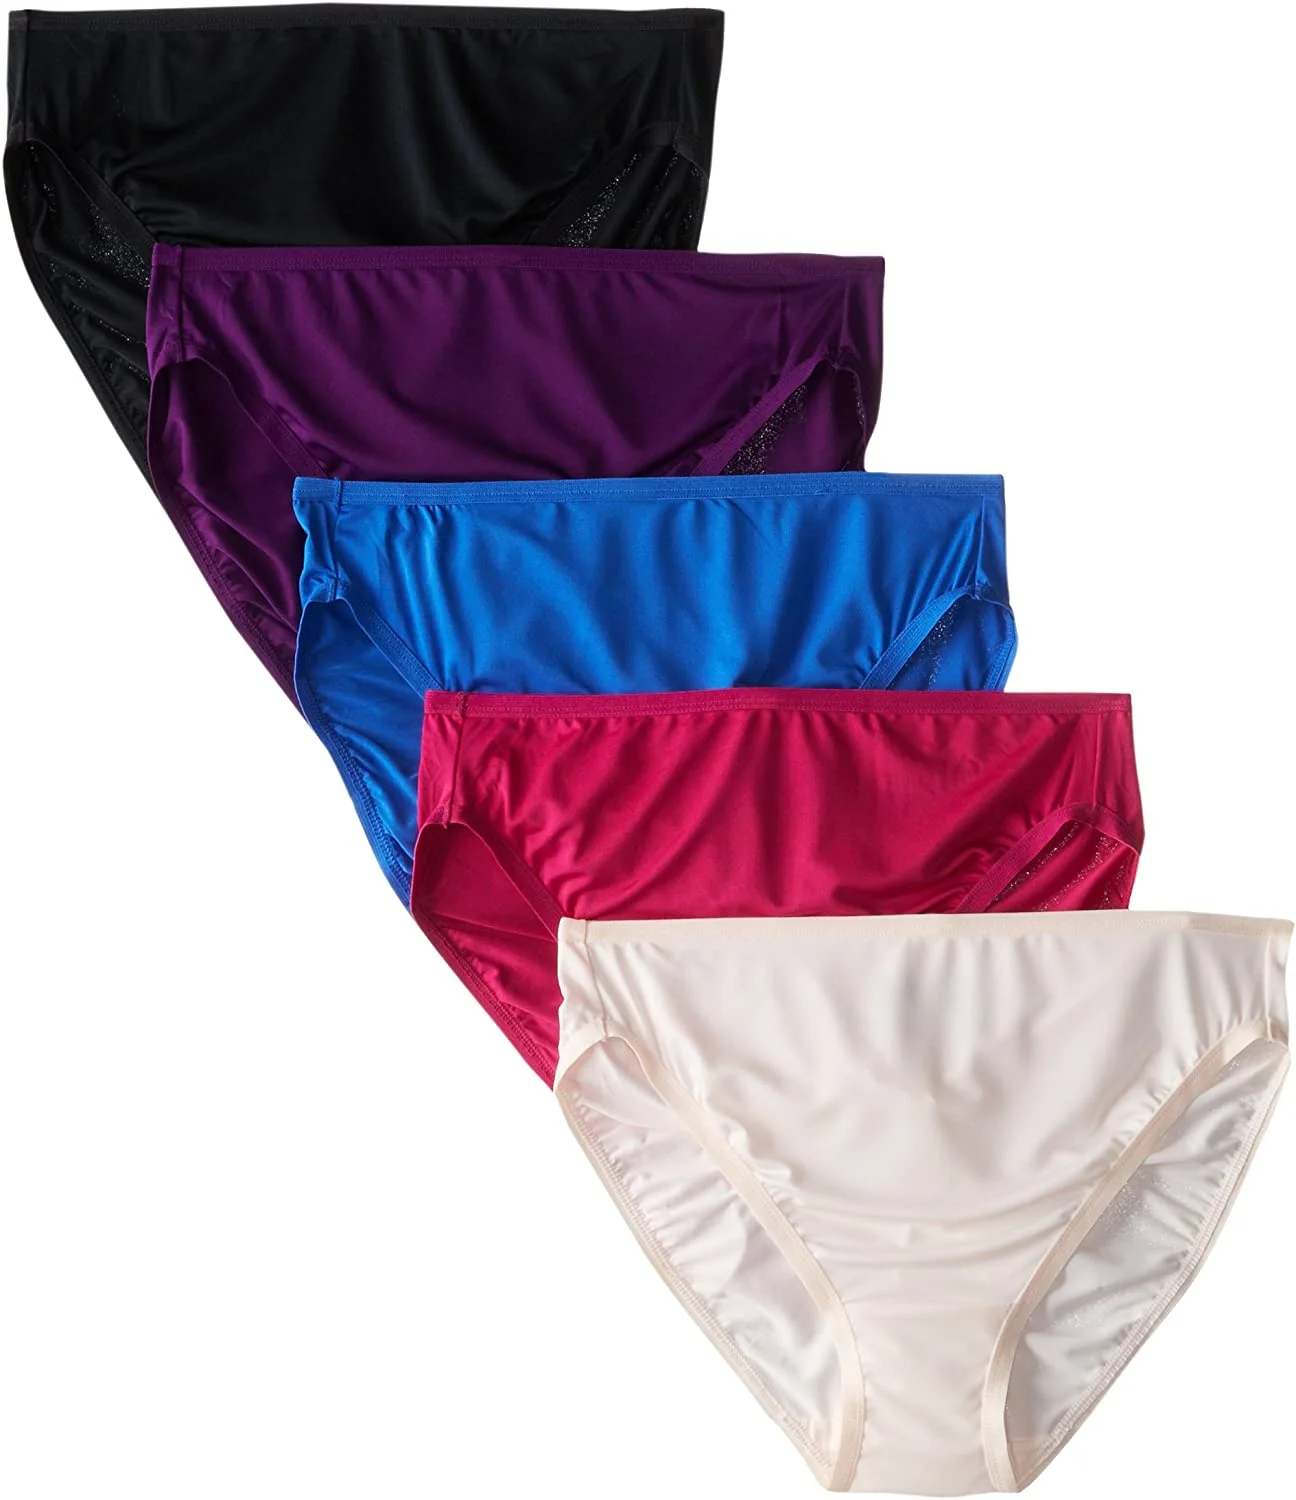 Wholesale Womens Microfiber Hi Cut Panties Manufcaturer Supplier Bangladesh Factory